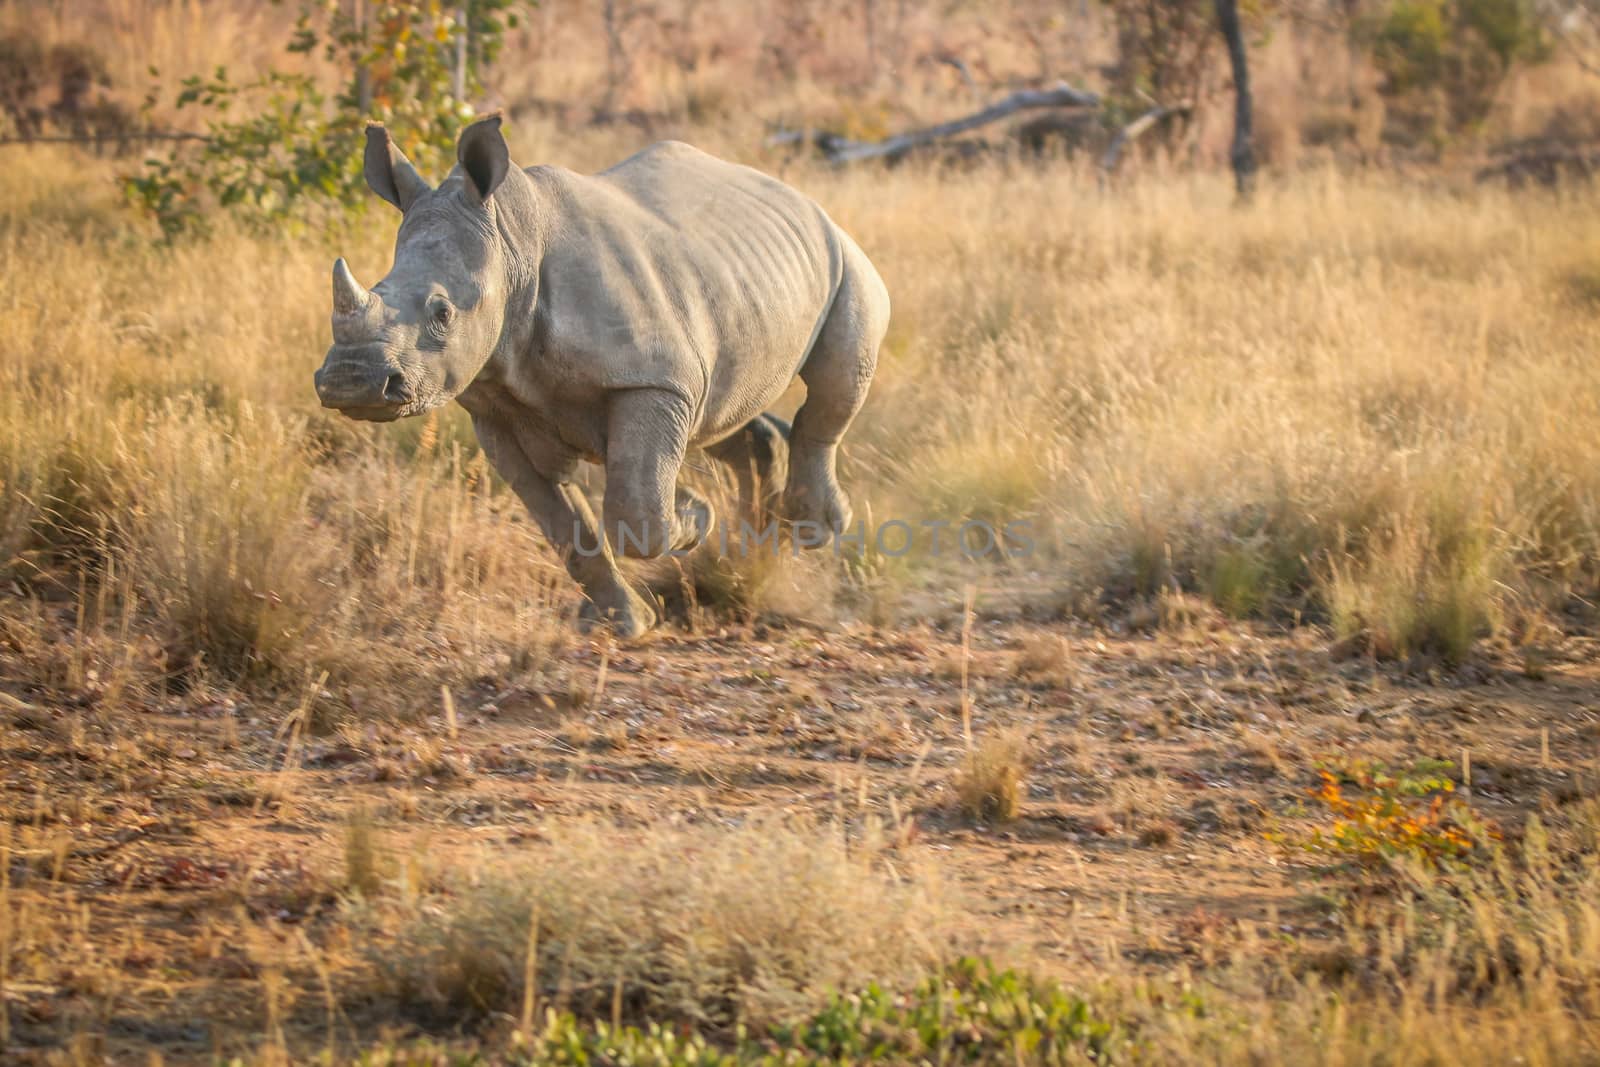 White rhino running in the grass. by Simoneemanphotography